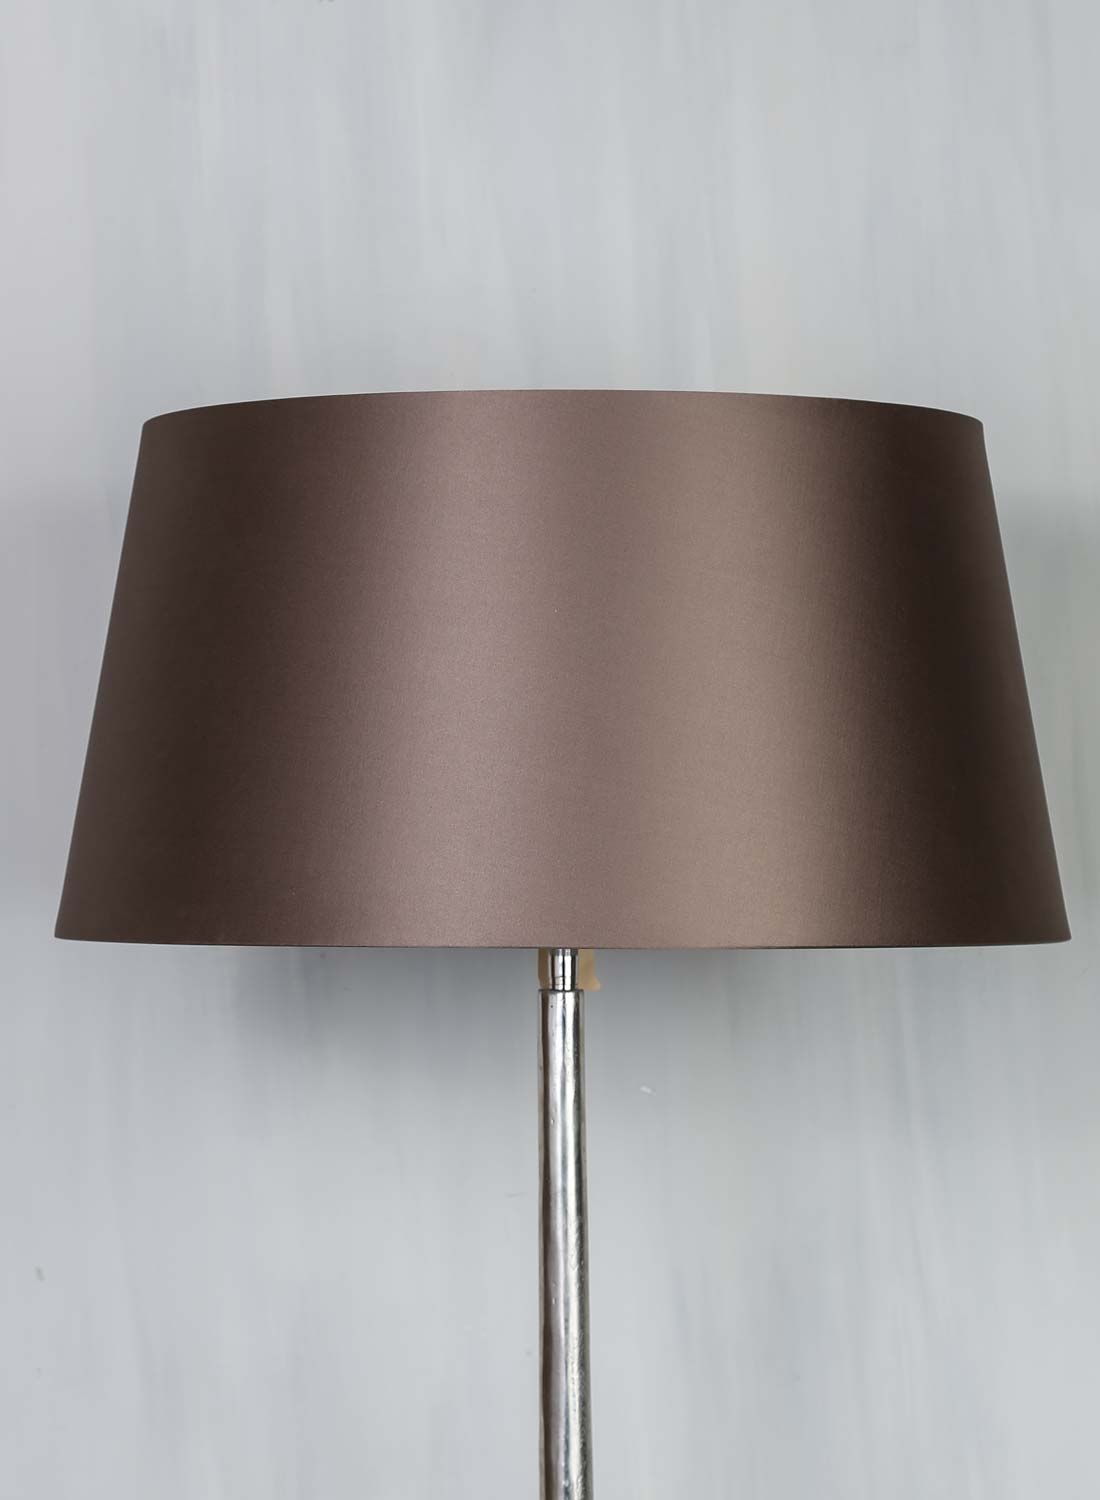 Large brown lampshade